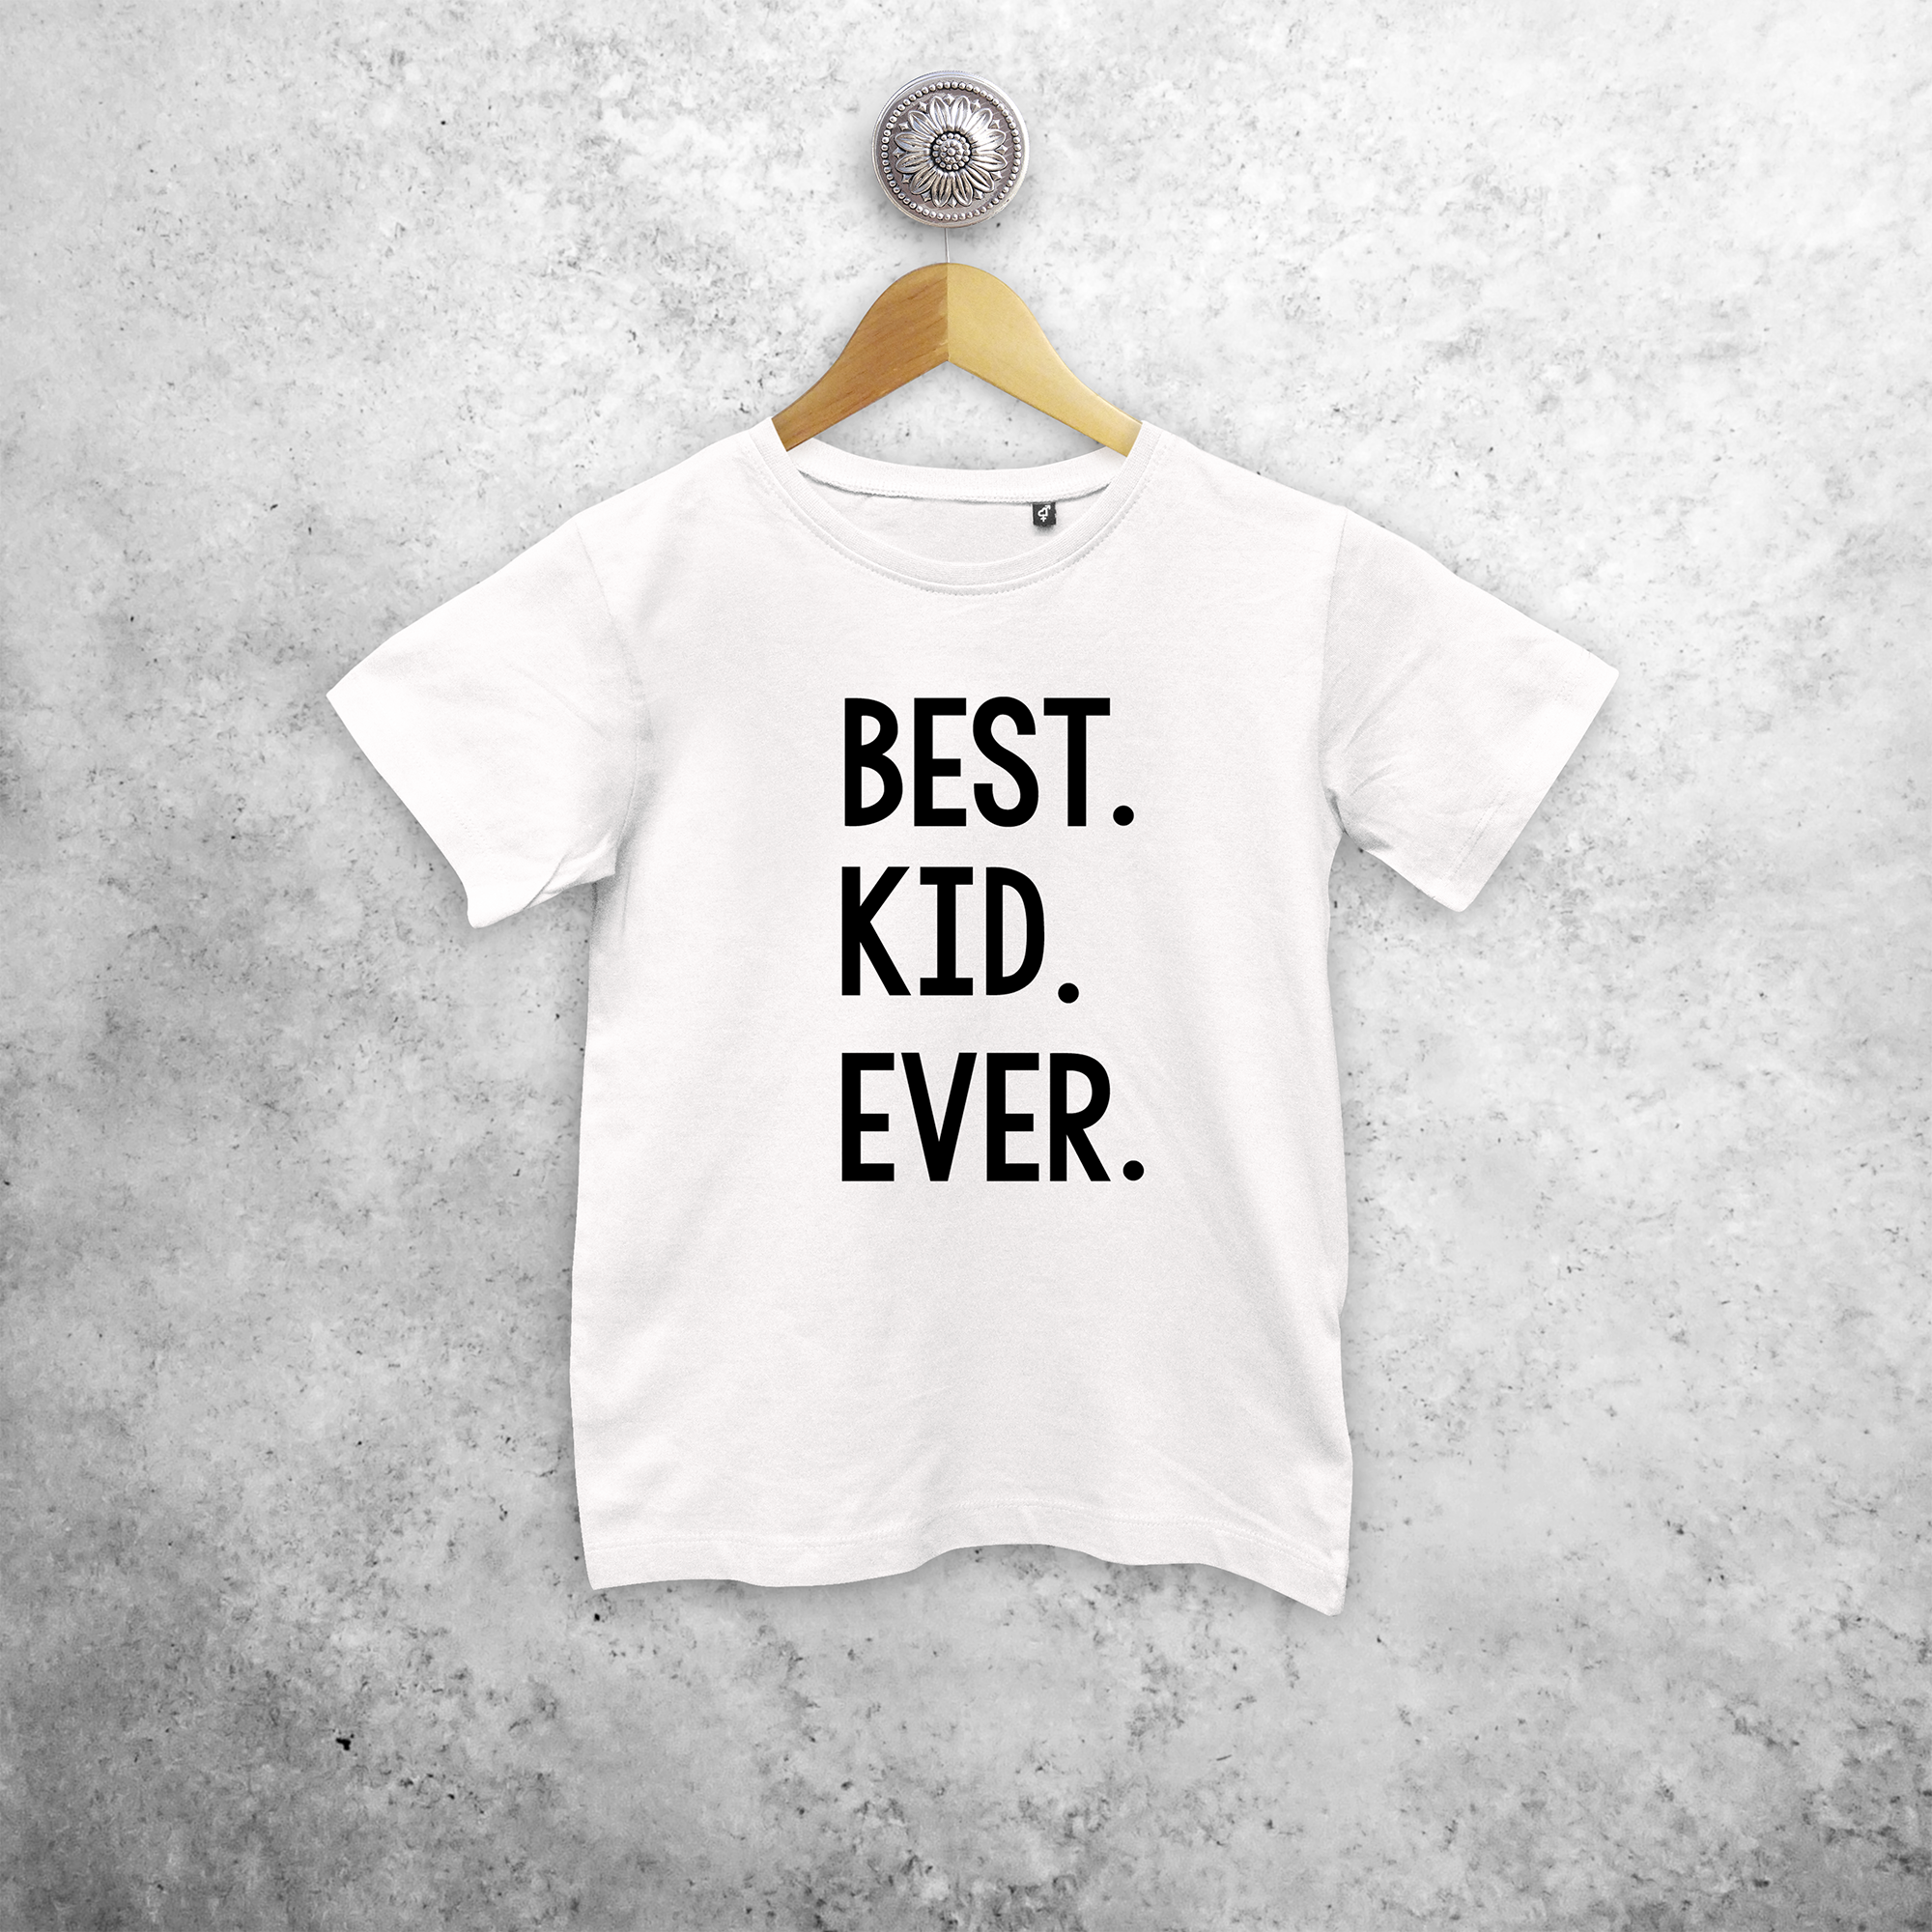 'Best. Kid. Ever.' kids shortsleeve shirt